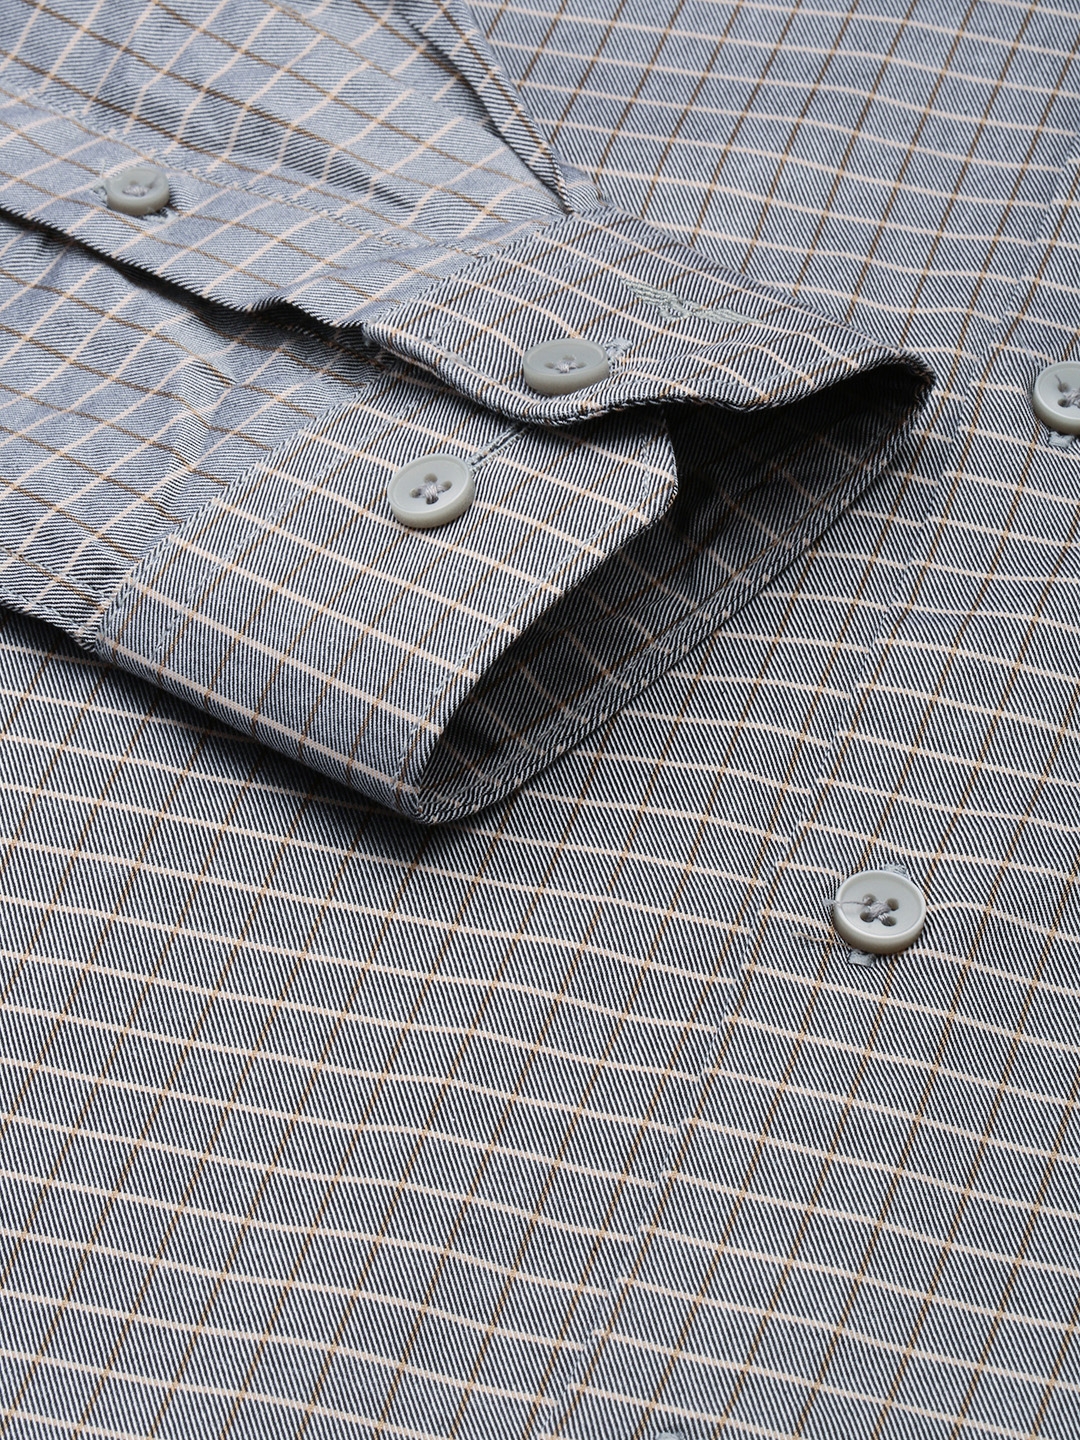 Showoff | SHOWOFF Men's Spread Collar Checked Grey Classic Shirt 6